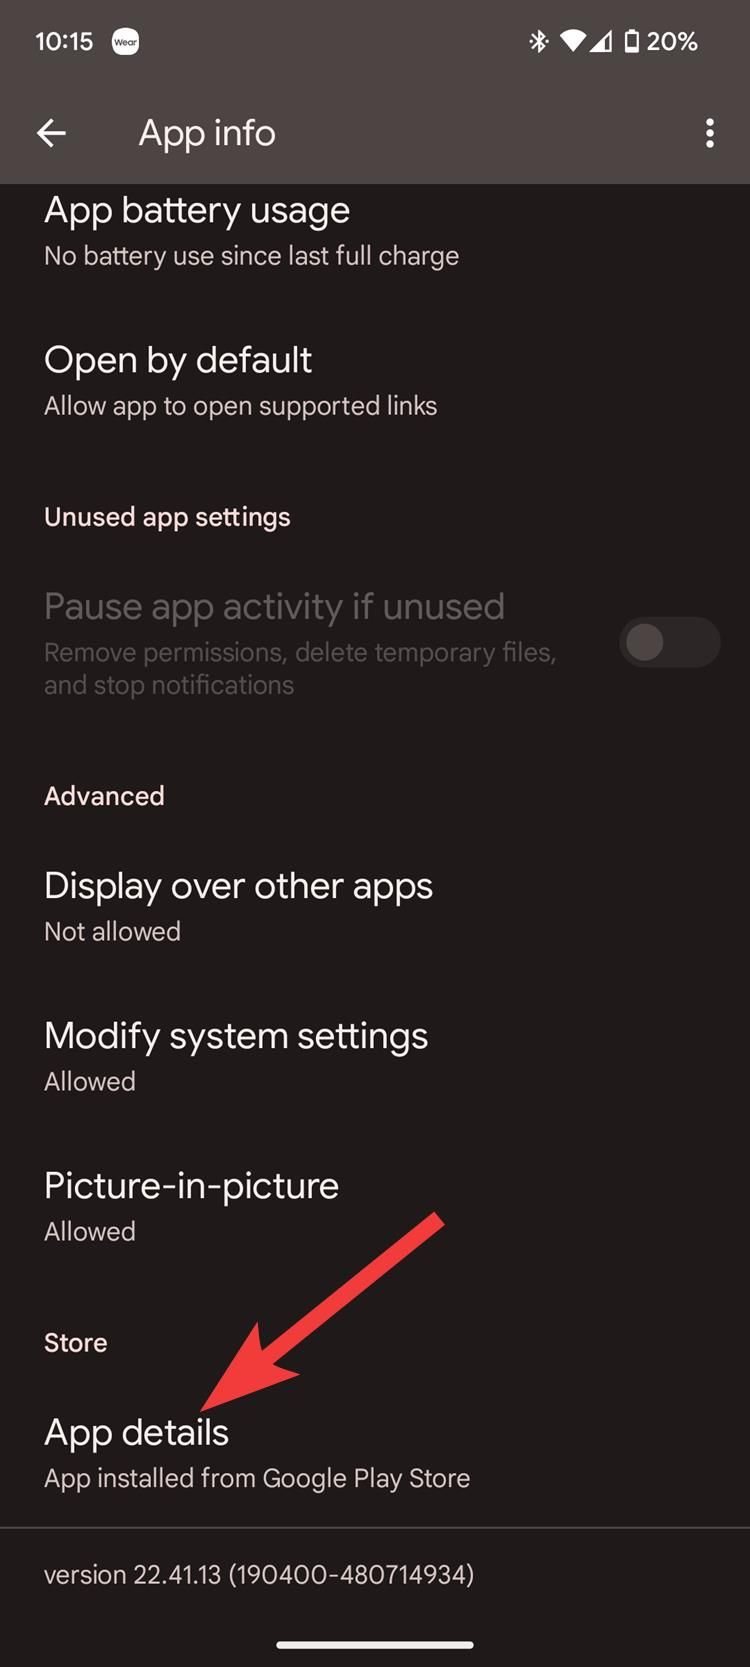 Google-Play-Services-app-details